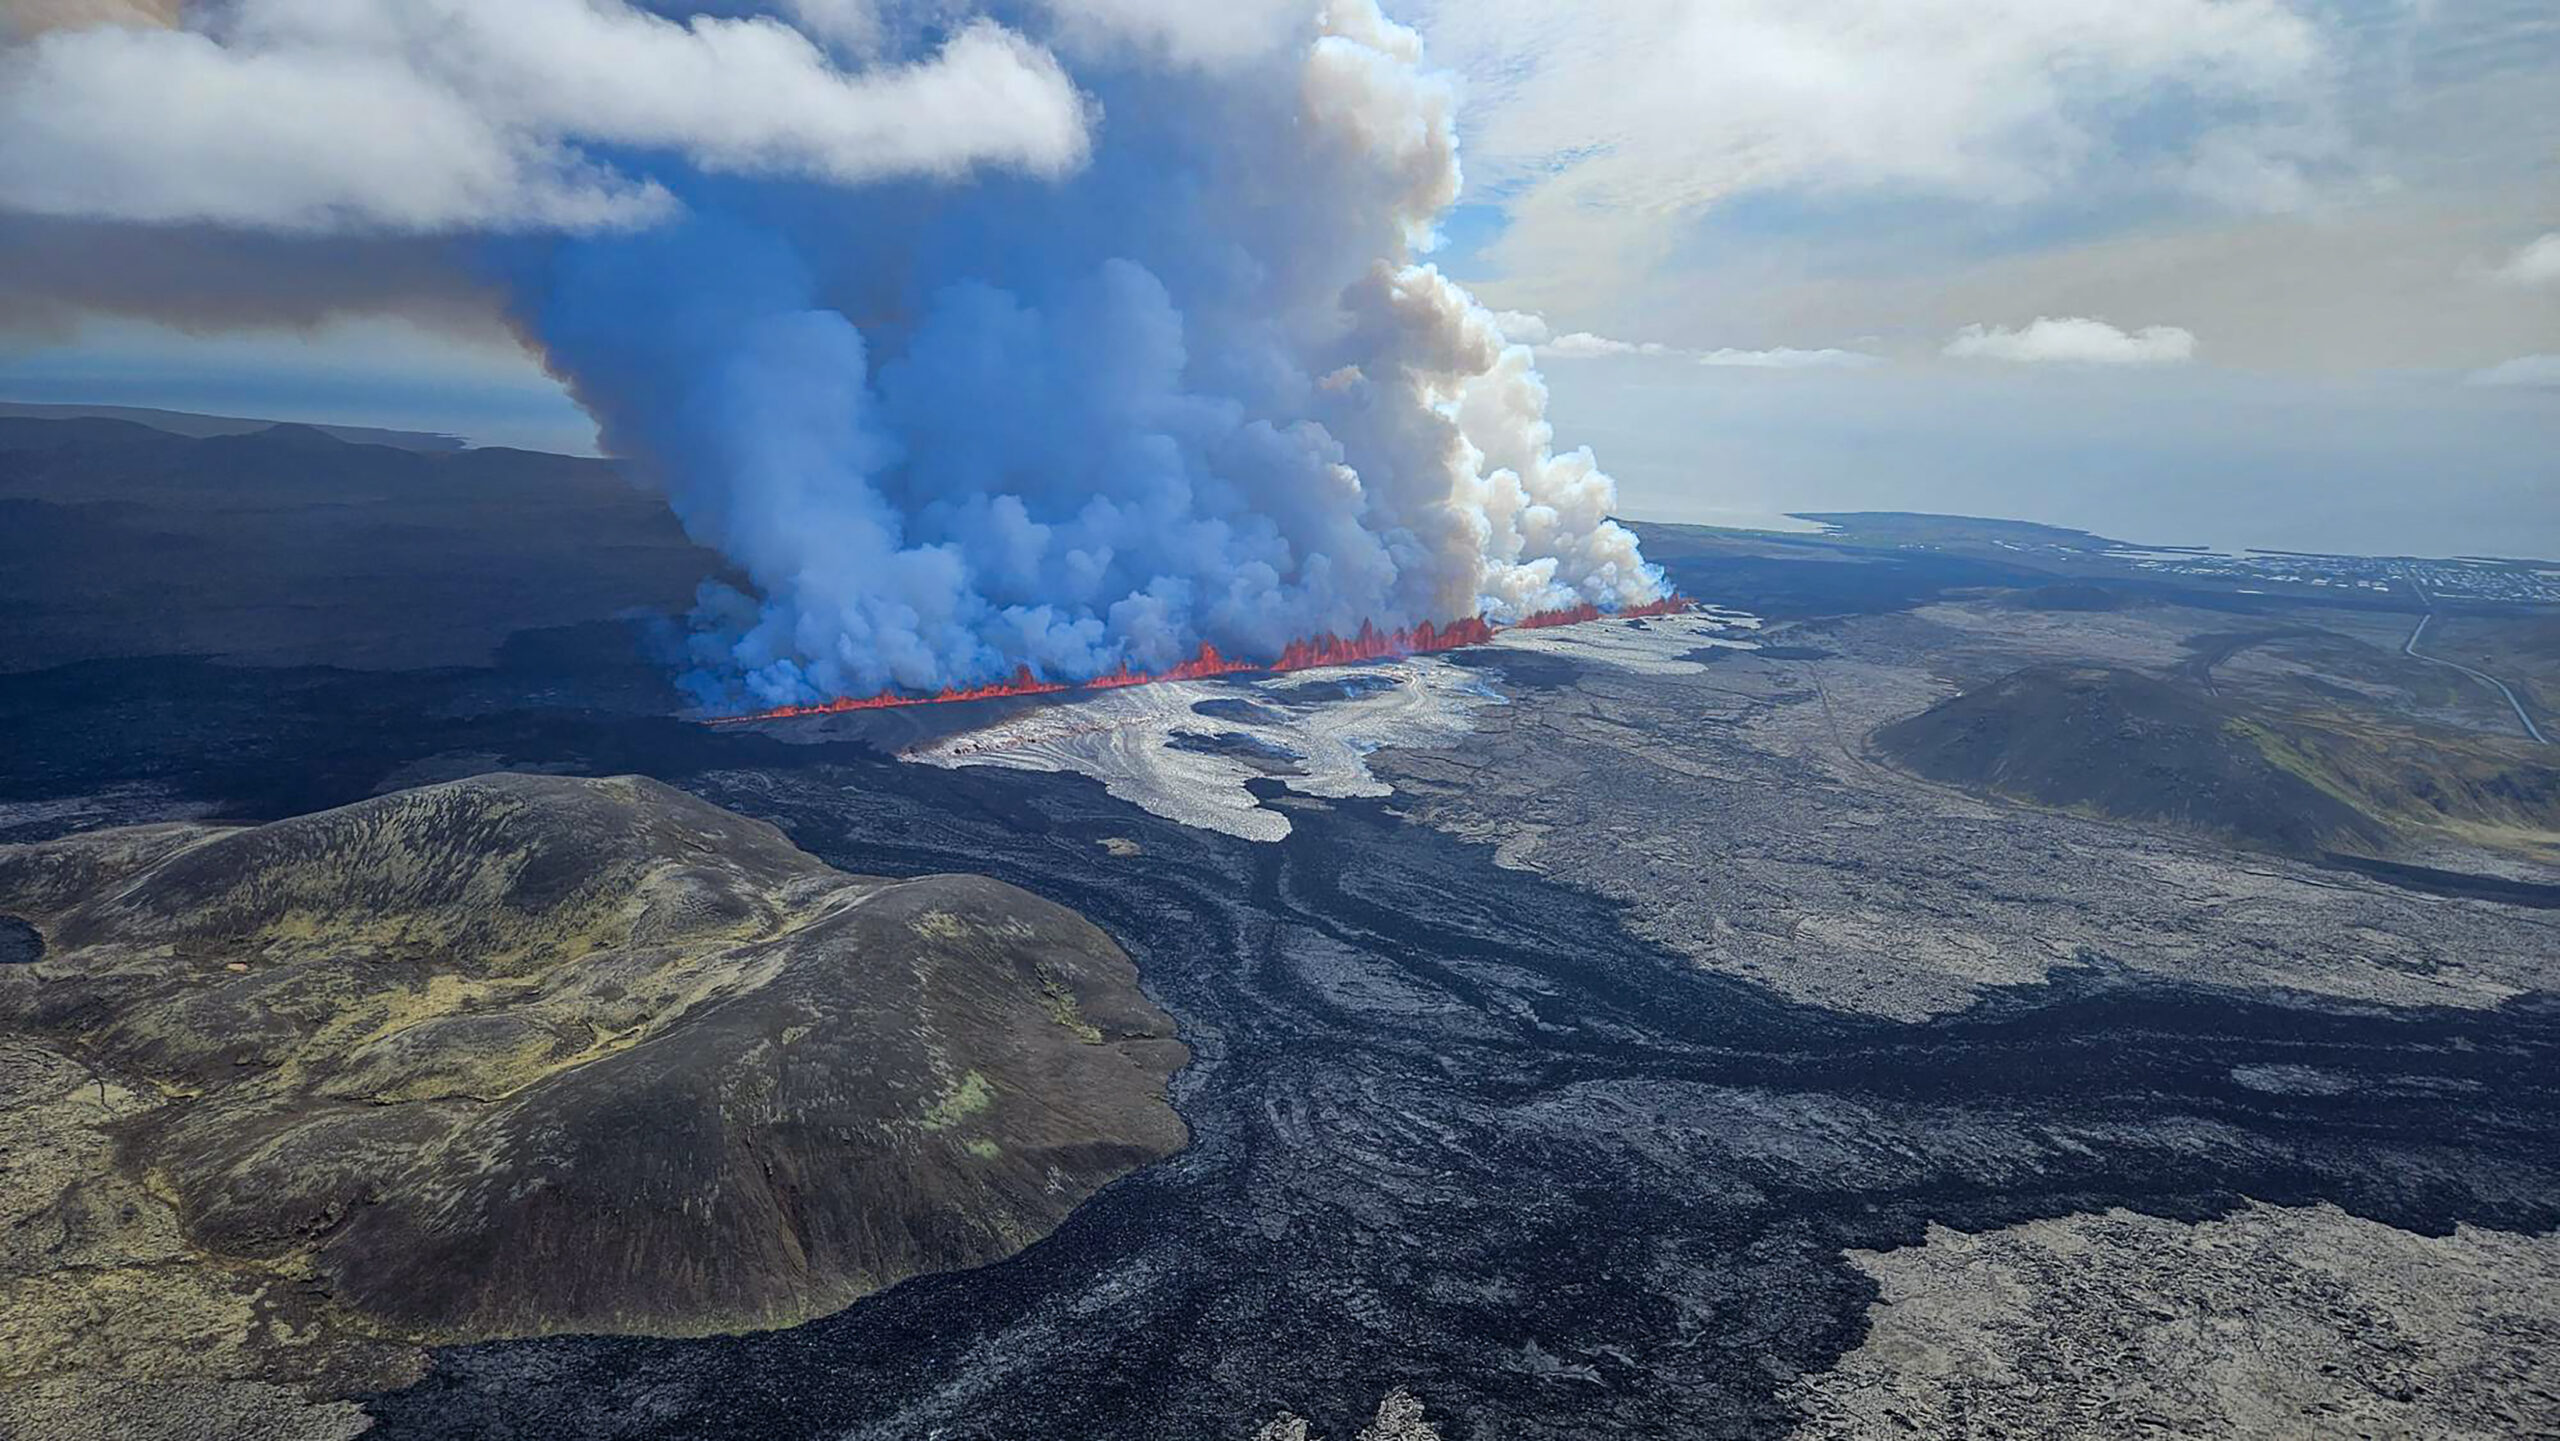 Volcanic eruption in Iceland ends after 24 days - met office